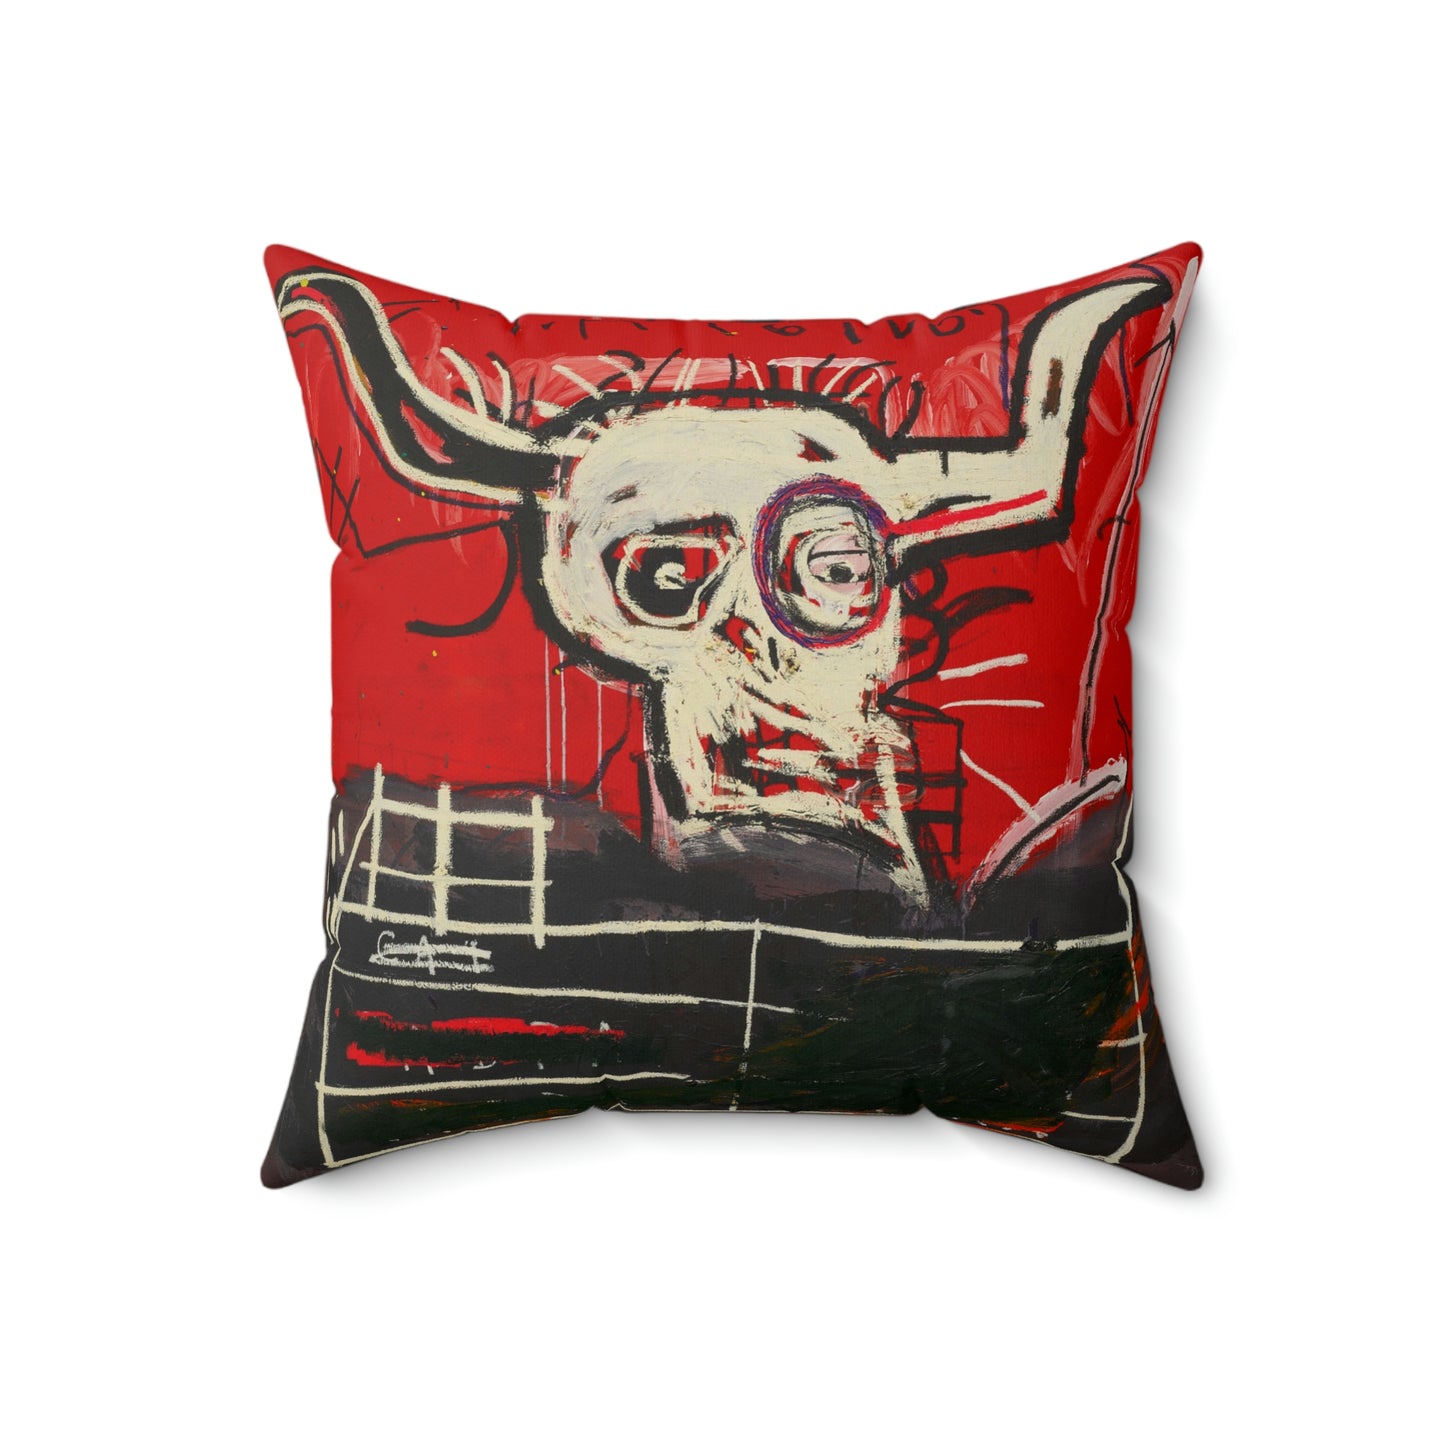 Jean-Michel Basquiat "Cabra" Artwork Square Throw Pillow